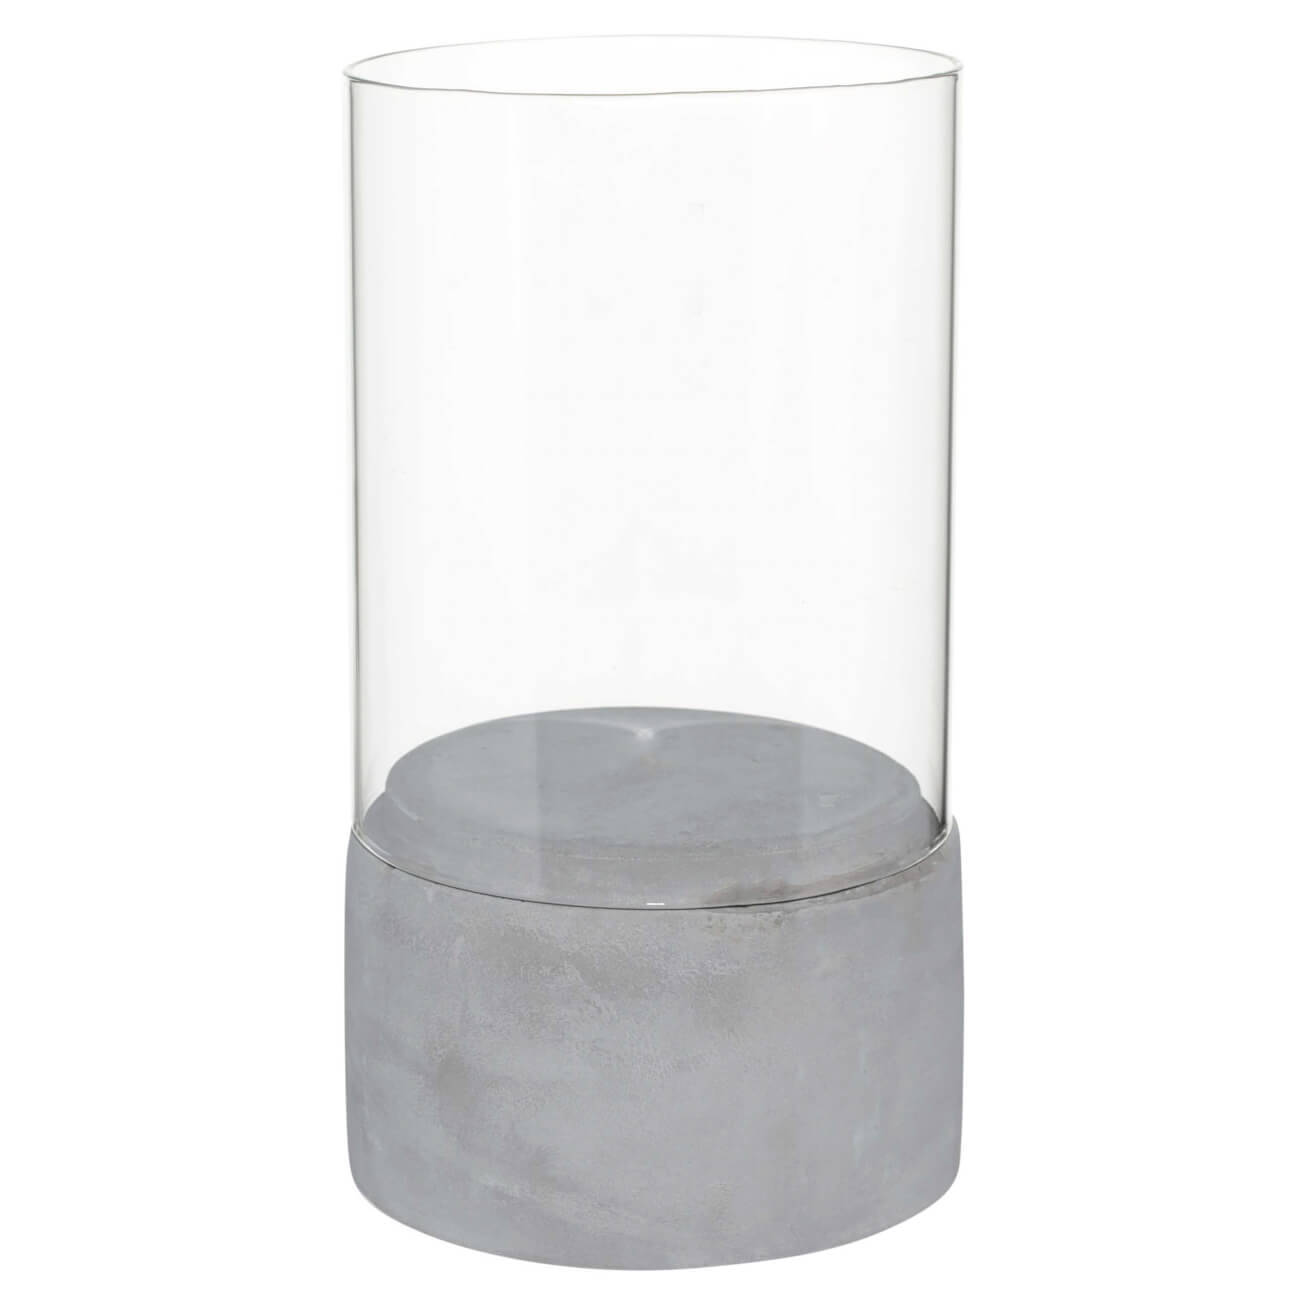 Подсвечник, 22 см, для одной свечи, стекло/бетон, Basic chasse hurricane smoke подсвечник